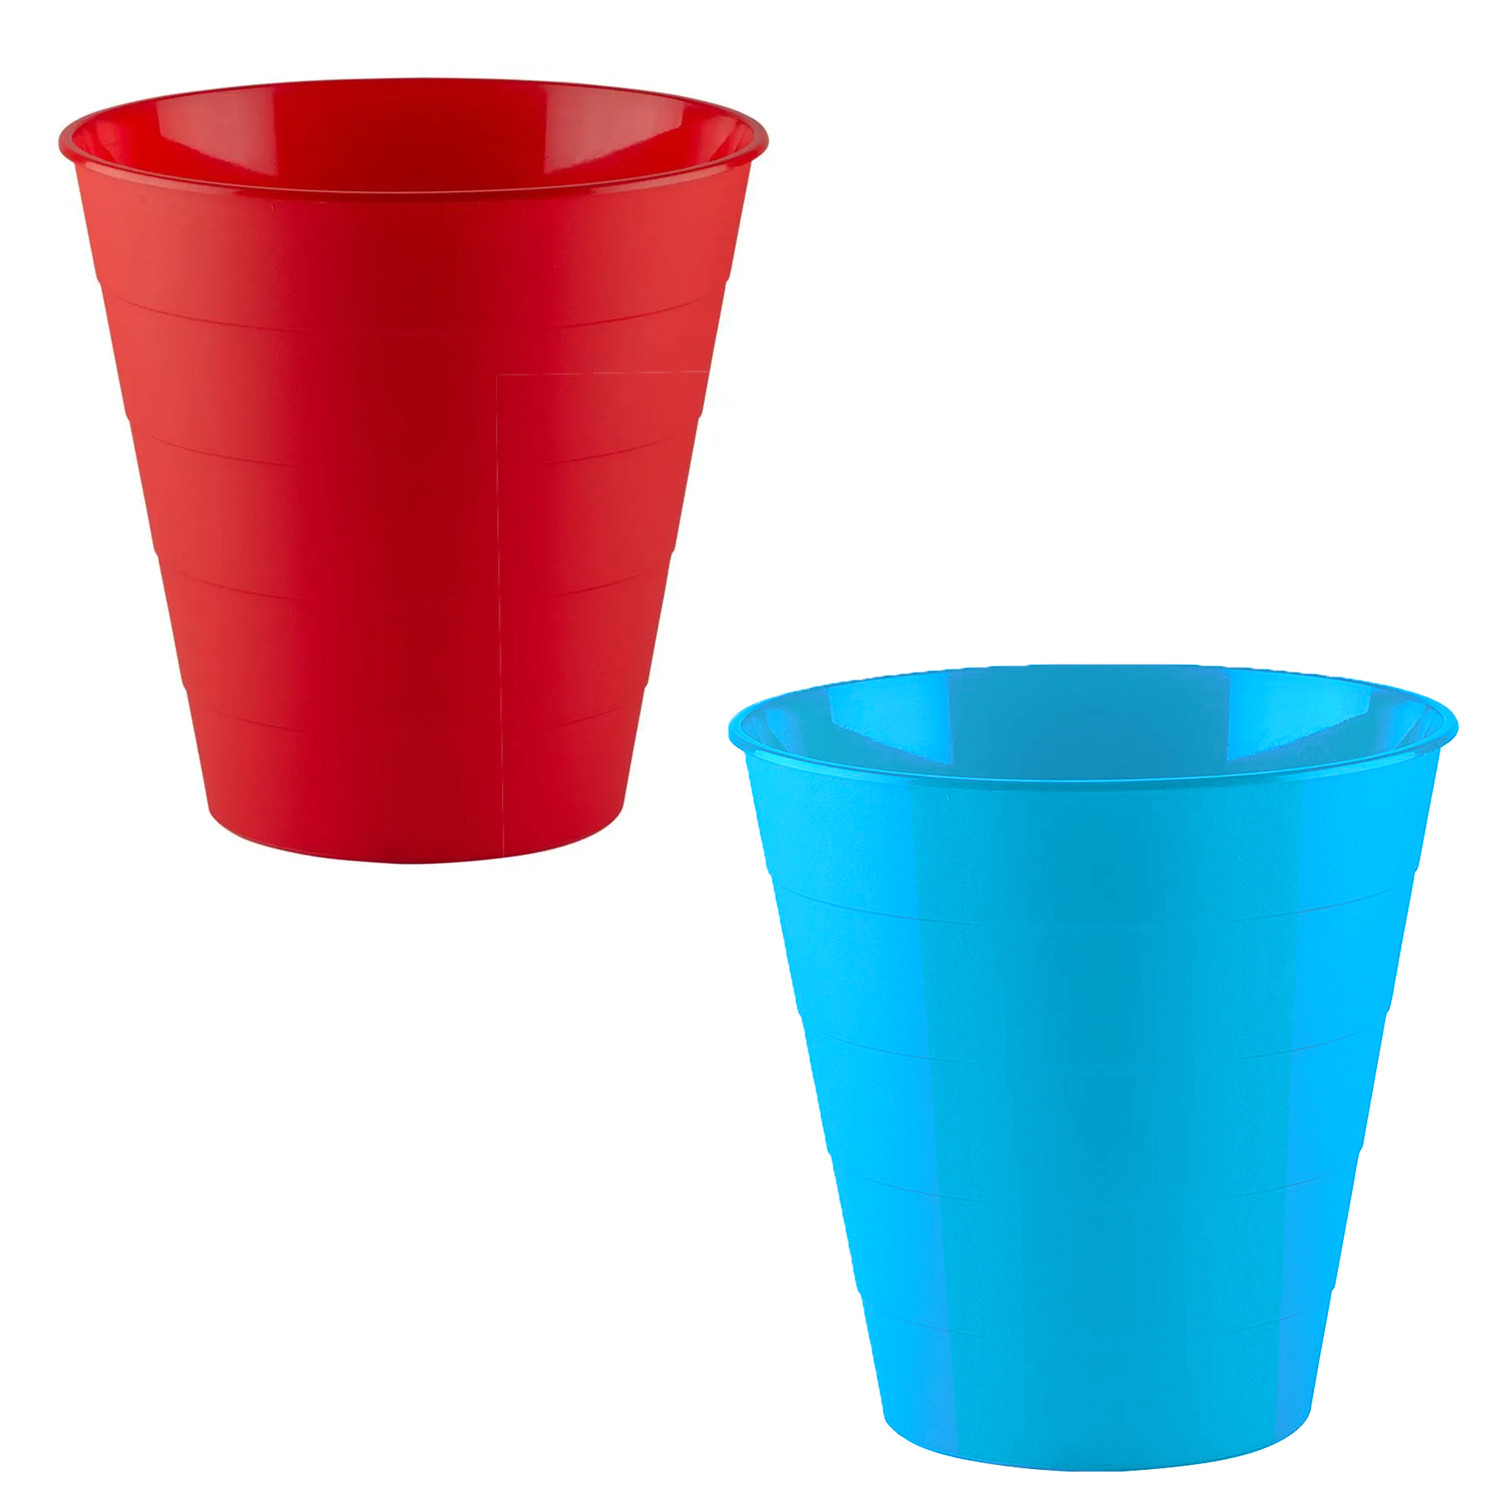 Kuber Industries Dustbin|Plastic Dustbin|Dustbins for Kitchen|Dustbin For Bedroom,Hall|Dustbin For office|8 Litre Dustbin|Pack of 2 (Multicolor)